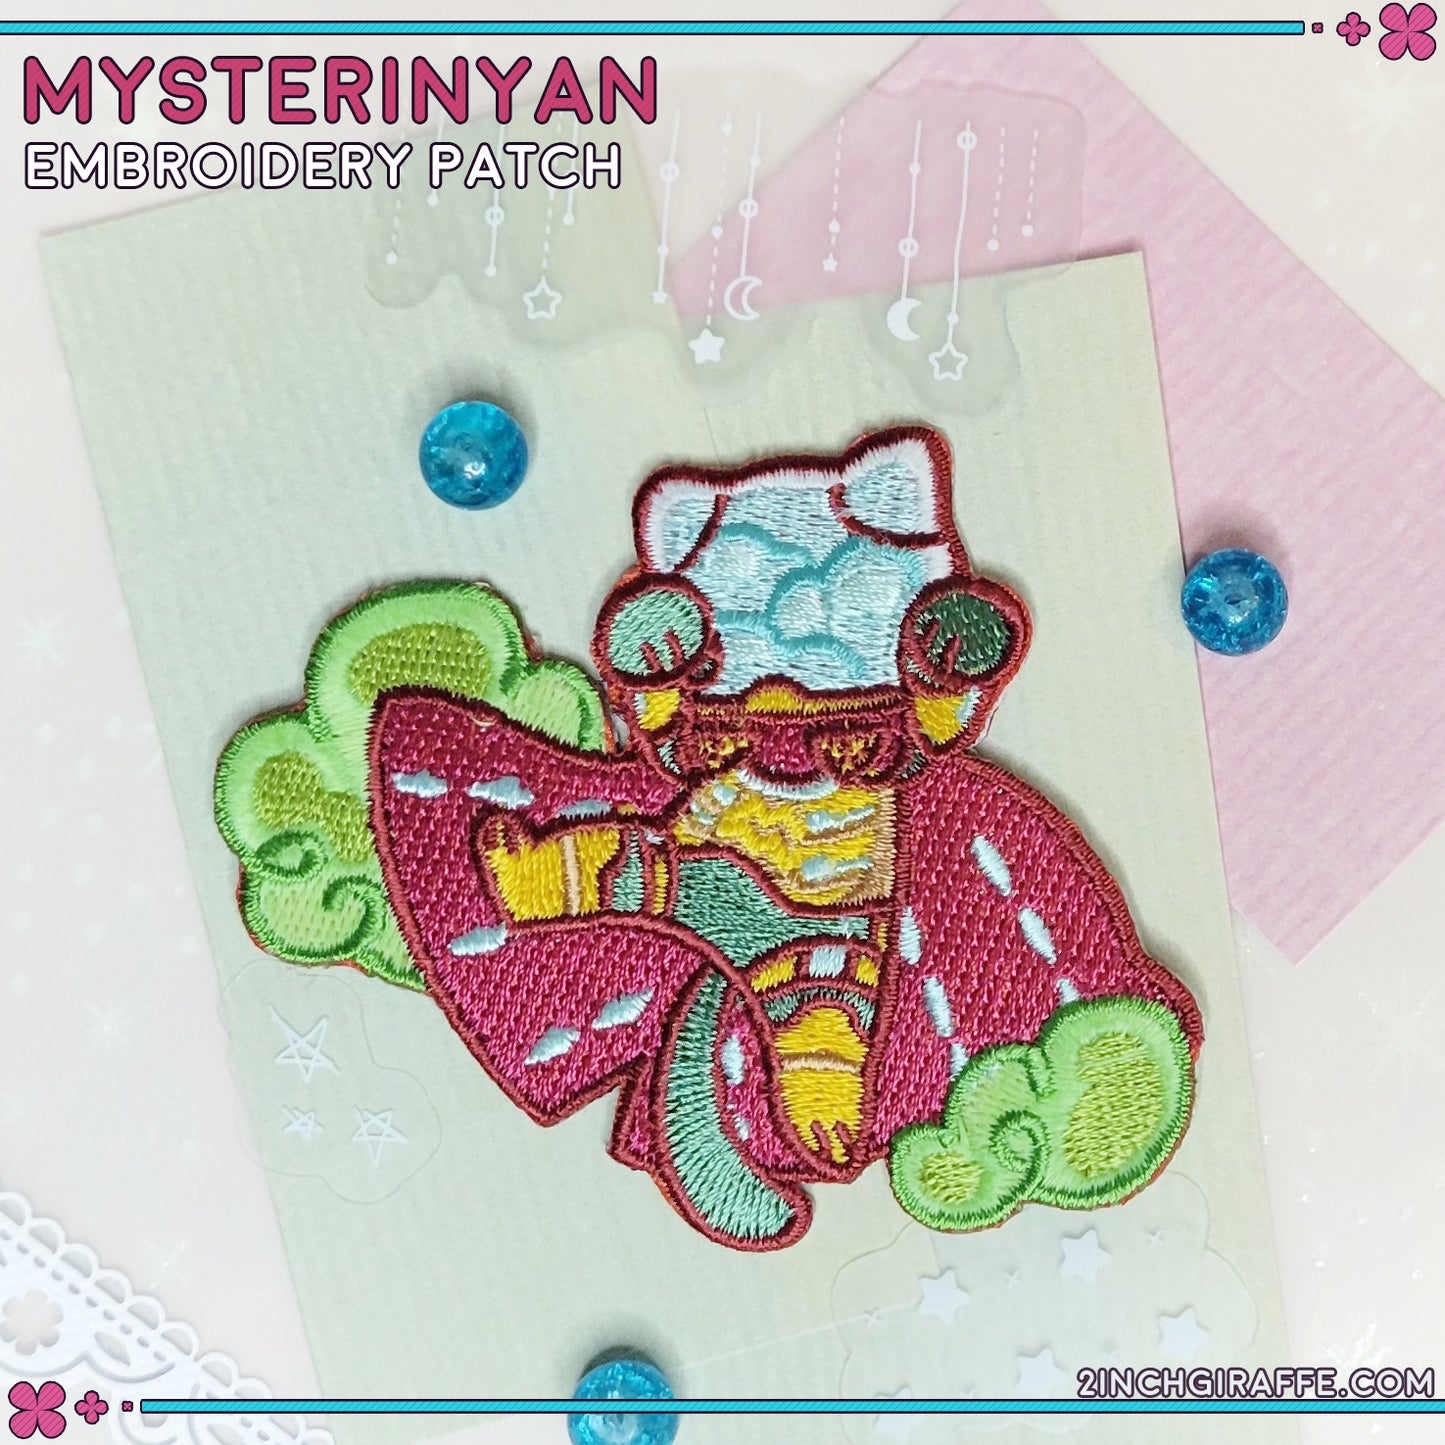 Mysterinyan Embroidery Patch